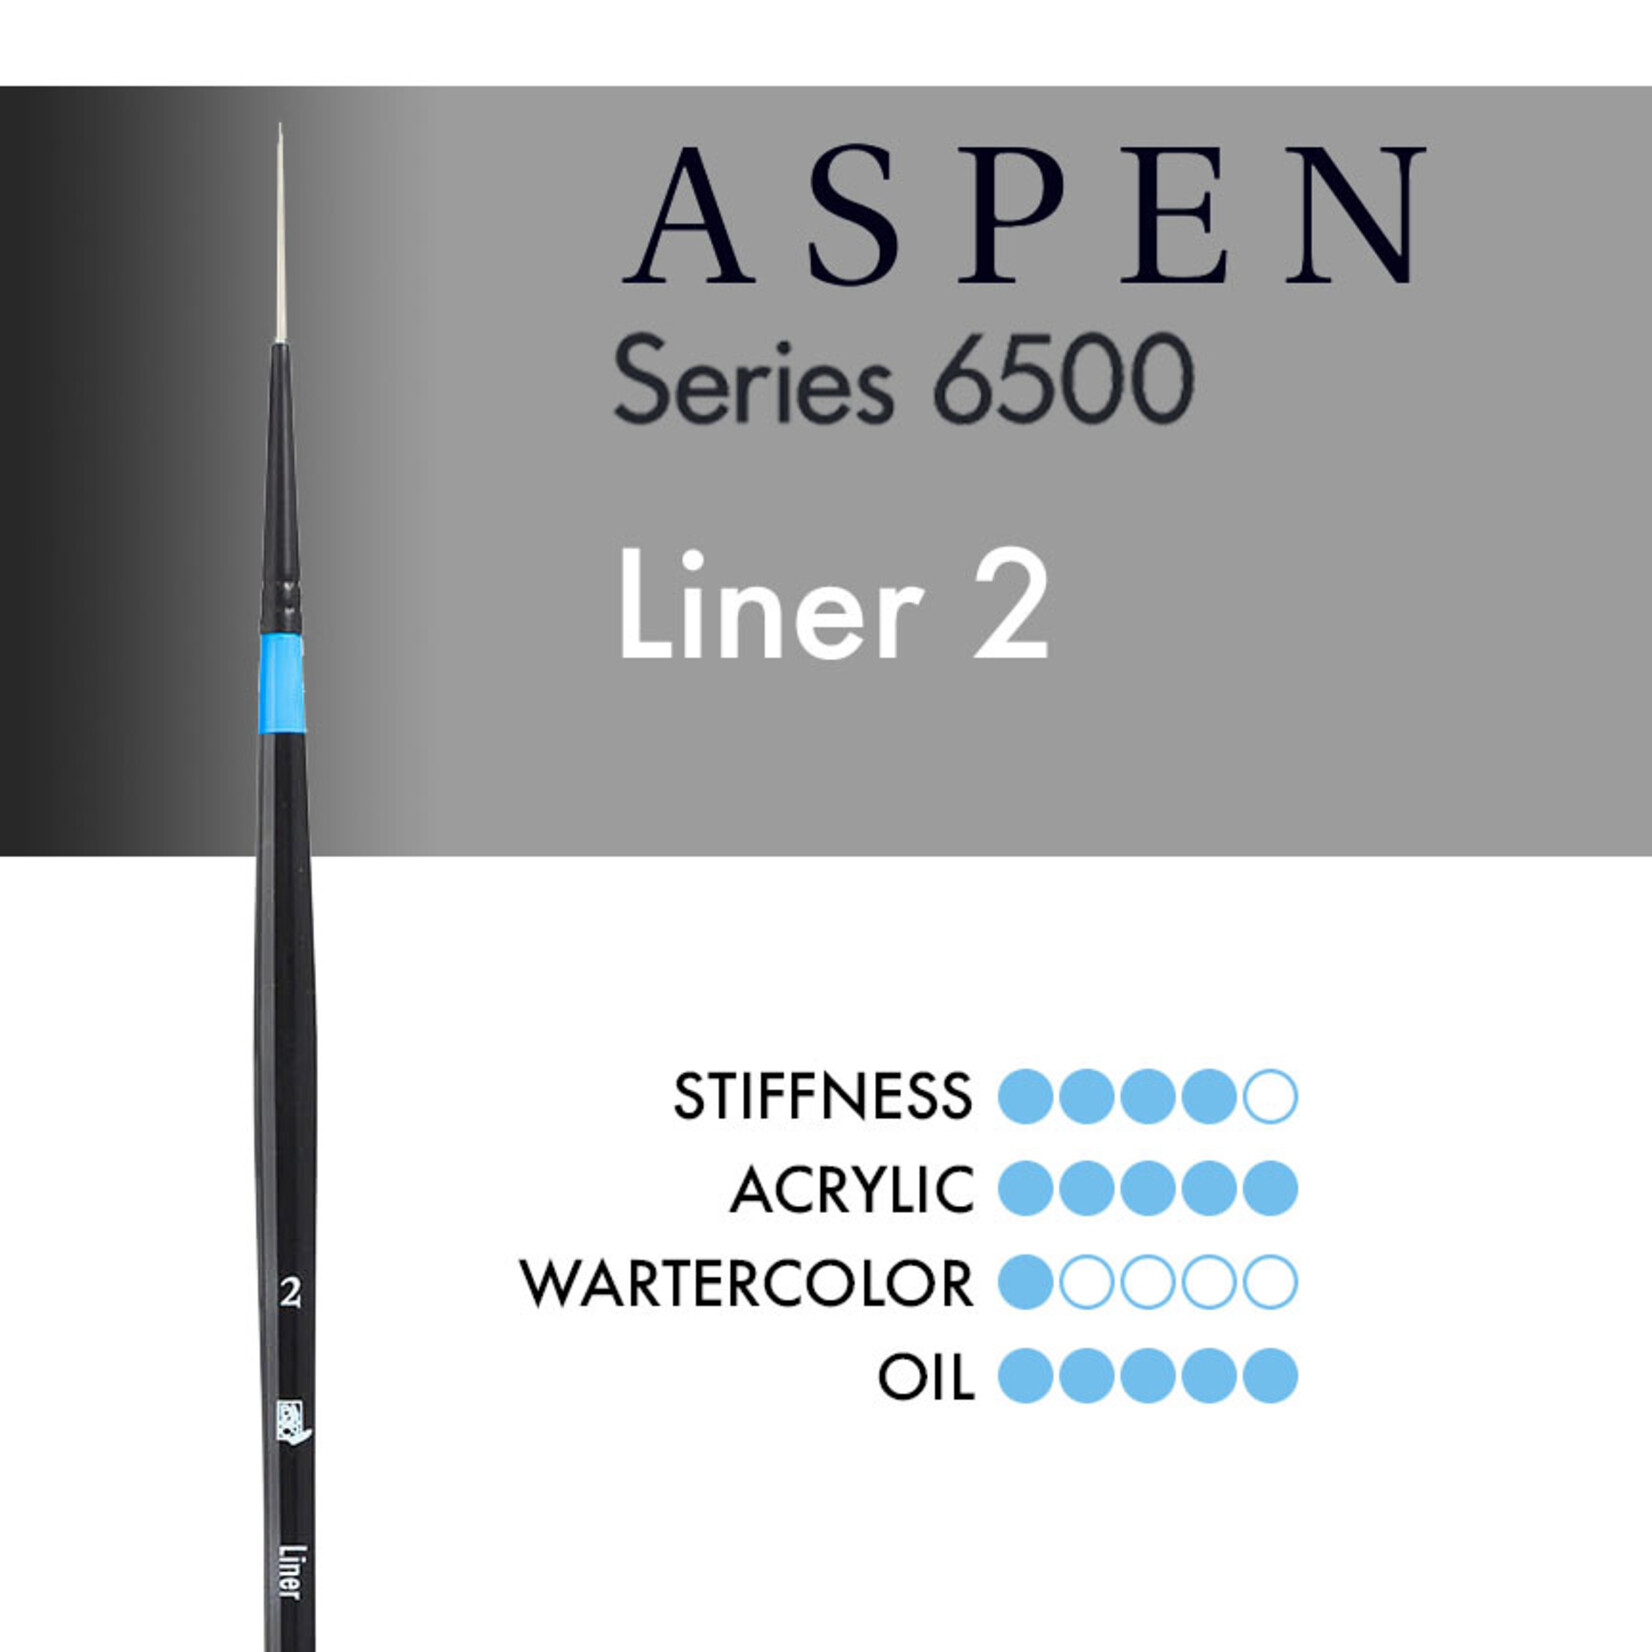 Princeton Aspen Liner 2